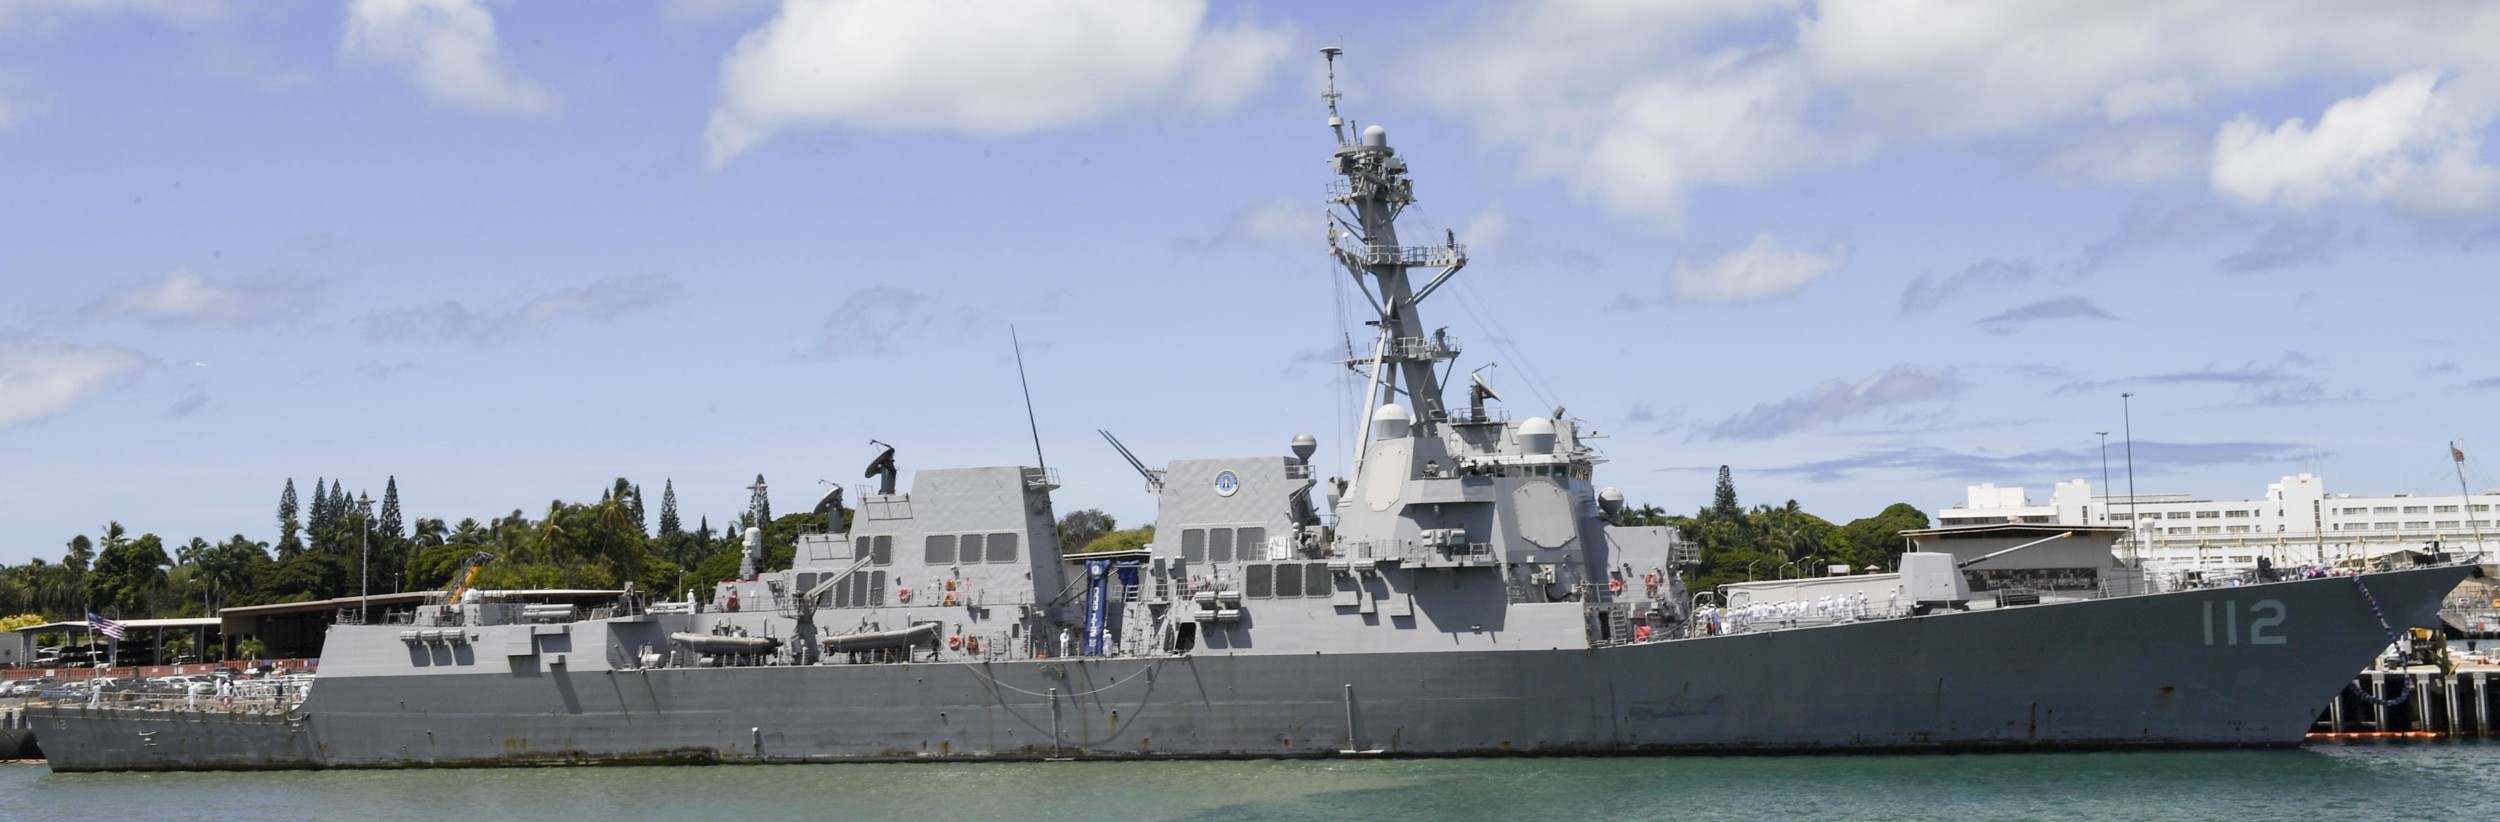 ddg-112 uss michael murphy arleigh burke class guided missile destroyer aegis us navy pearl harbor hickam hawaii 34